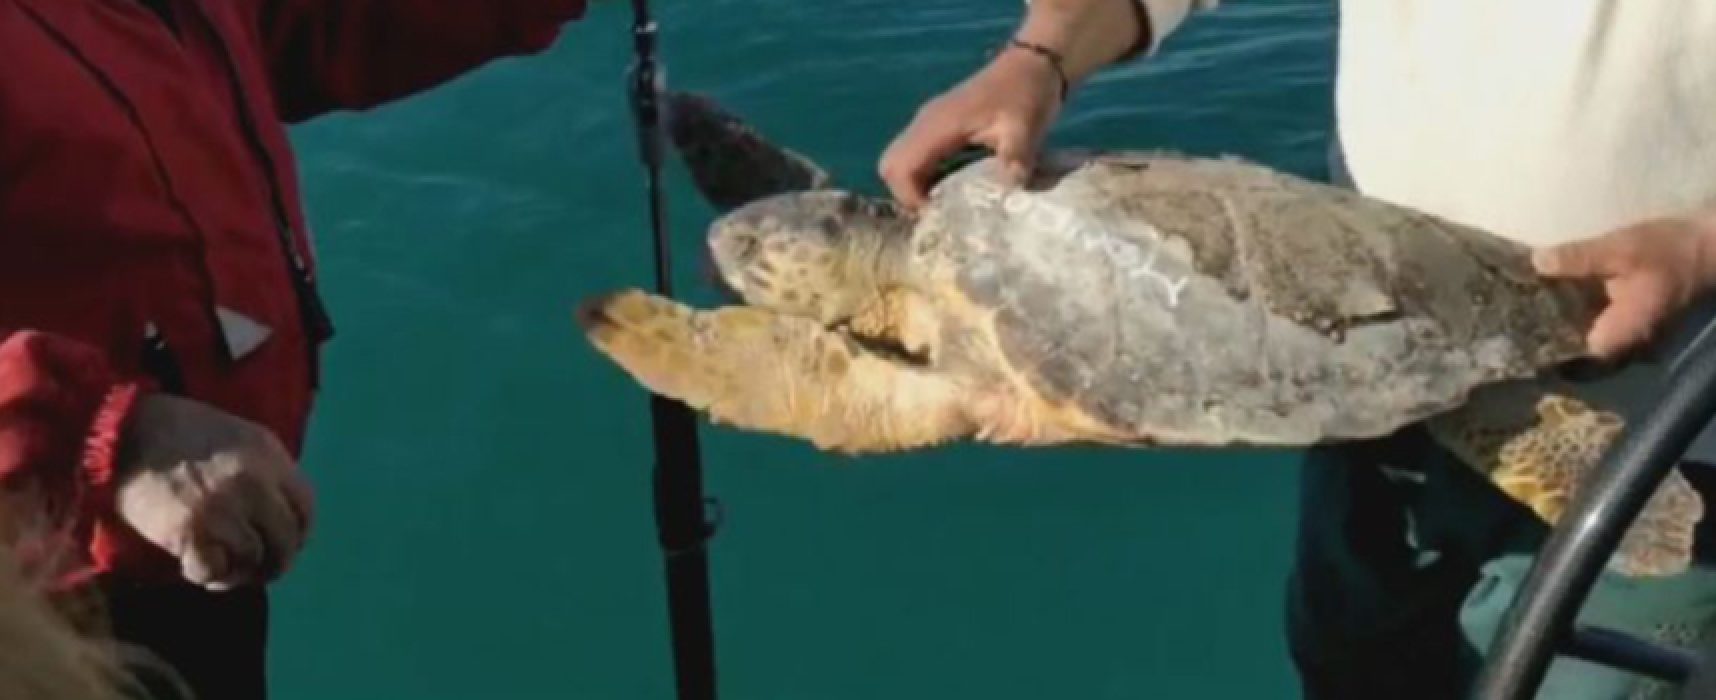 Liberate 4 tartarughe marine nelle acque al largo di Bisceglie / VIDEO